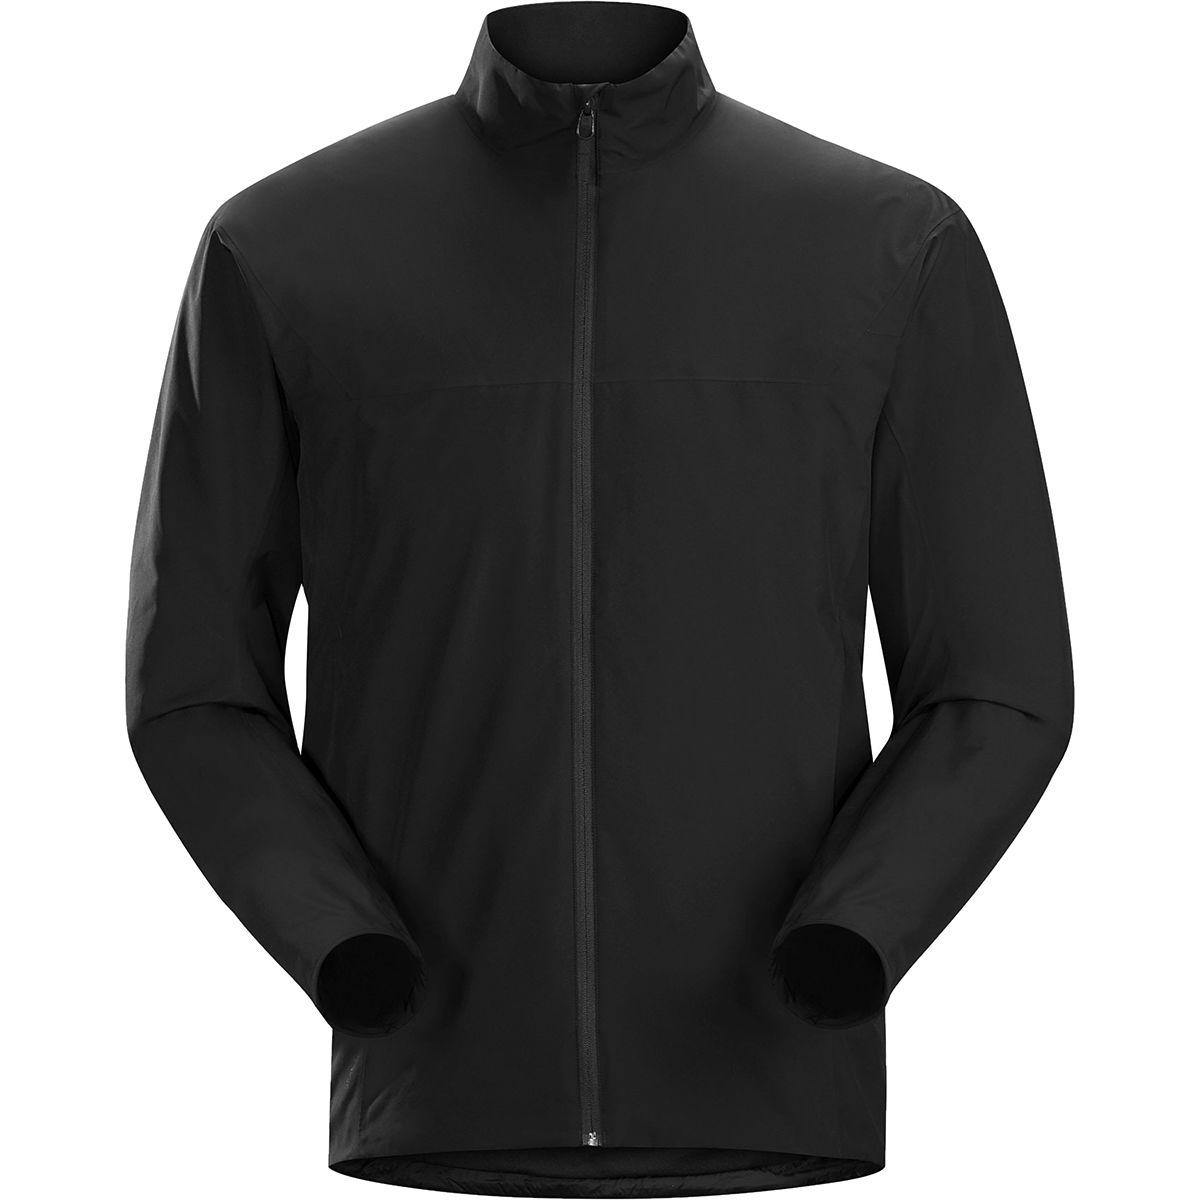 Arc'teryx Solano Jacket in Black for Men - Lyst